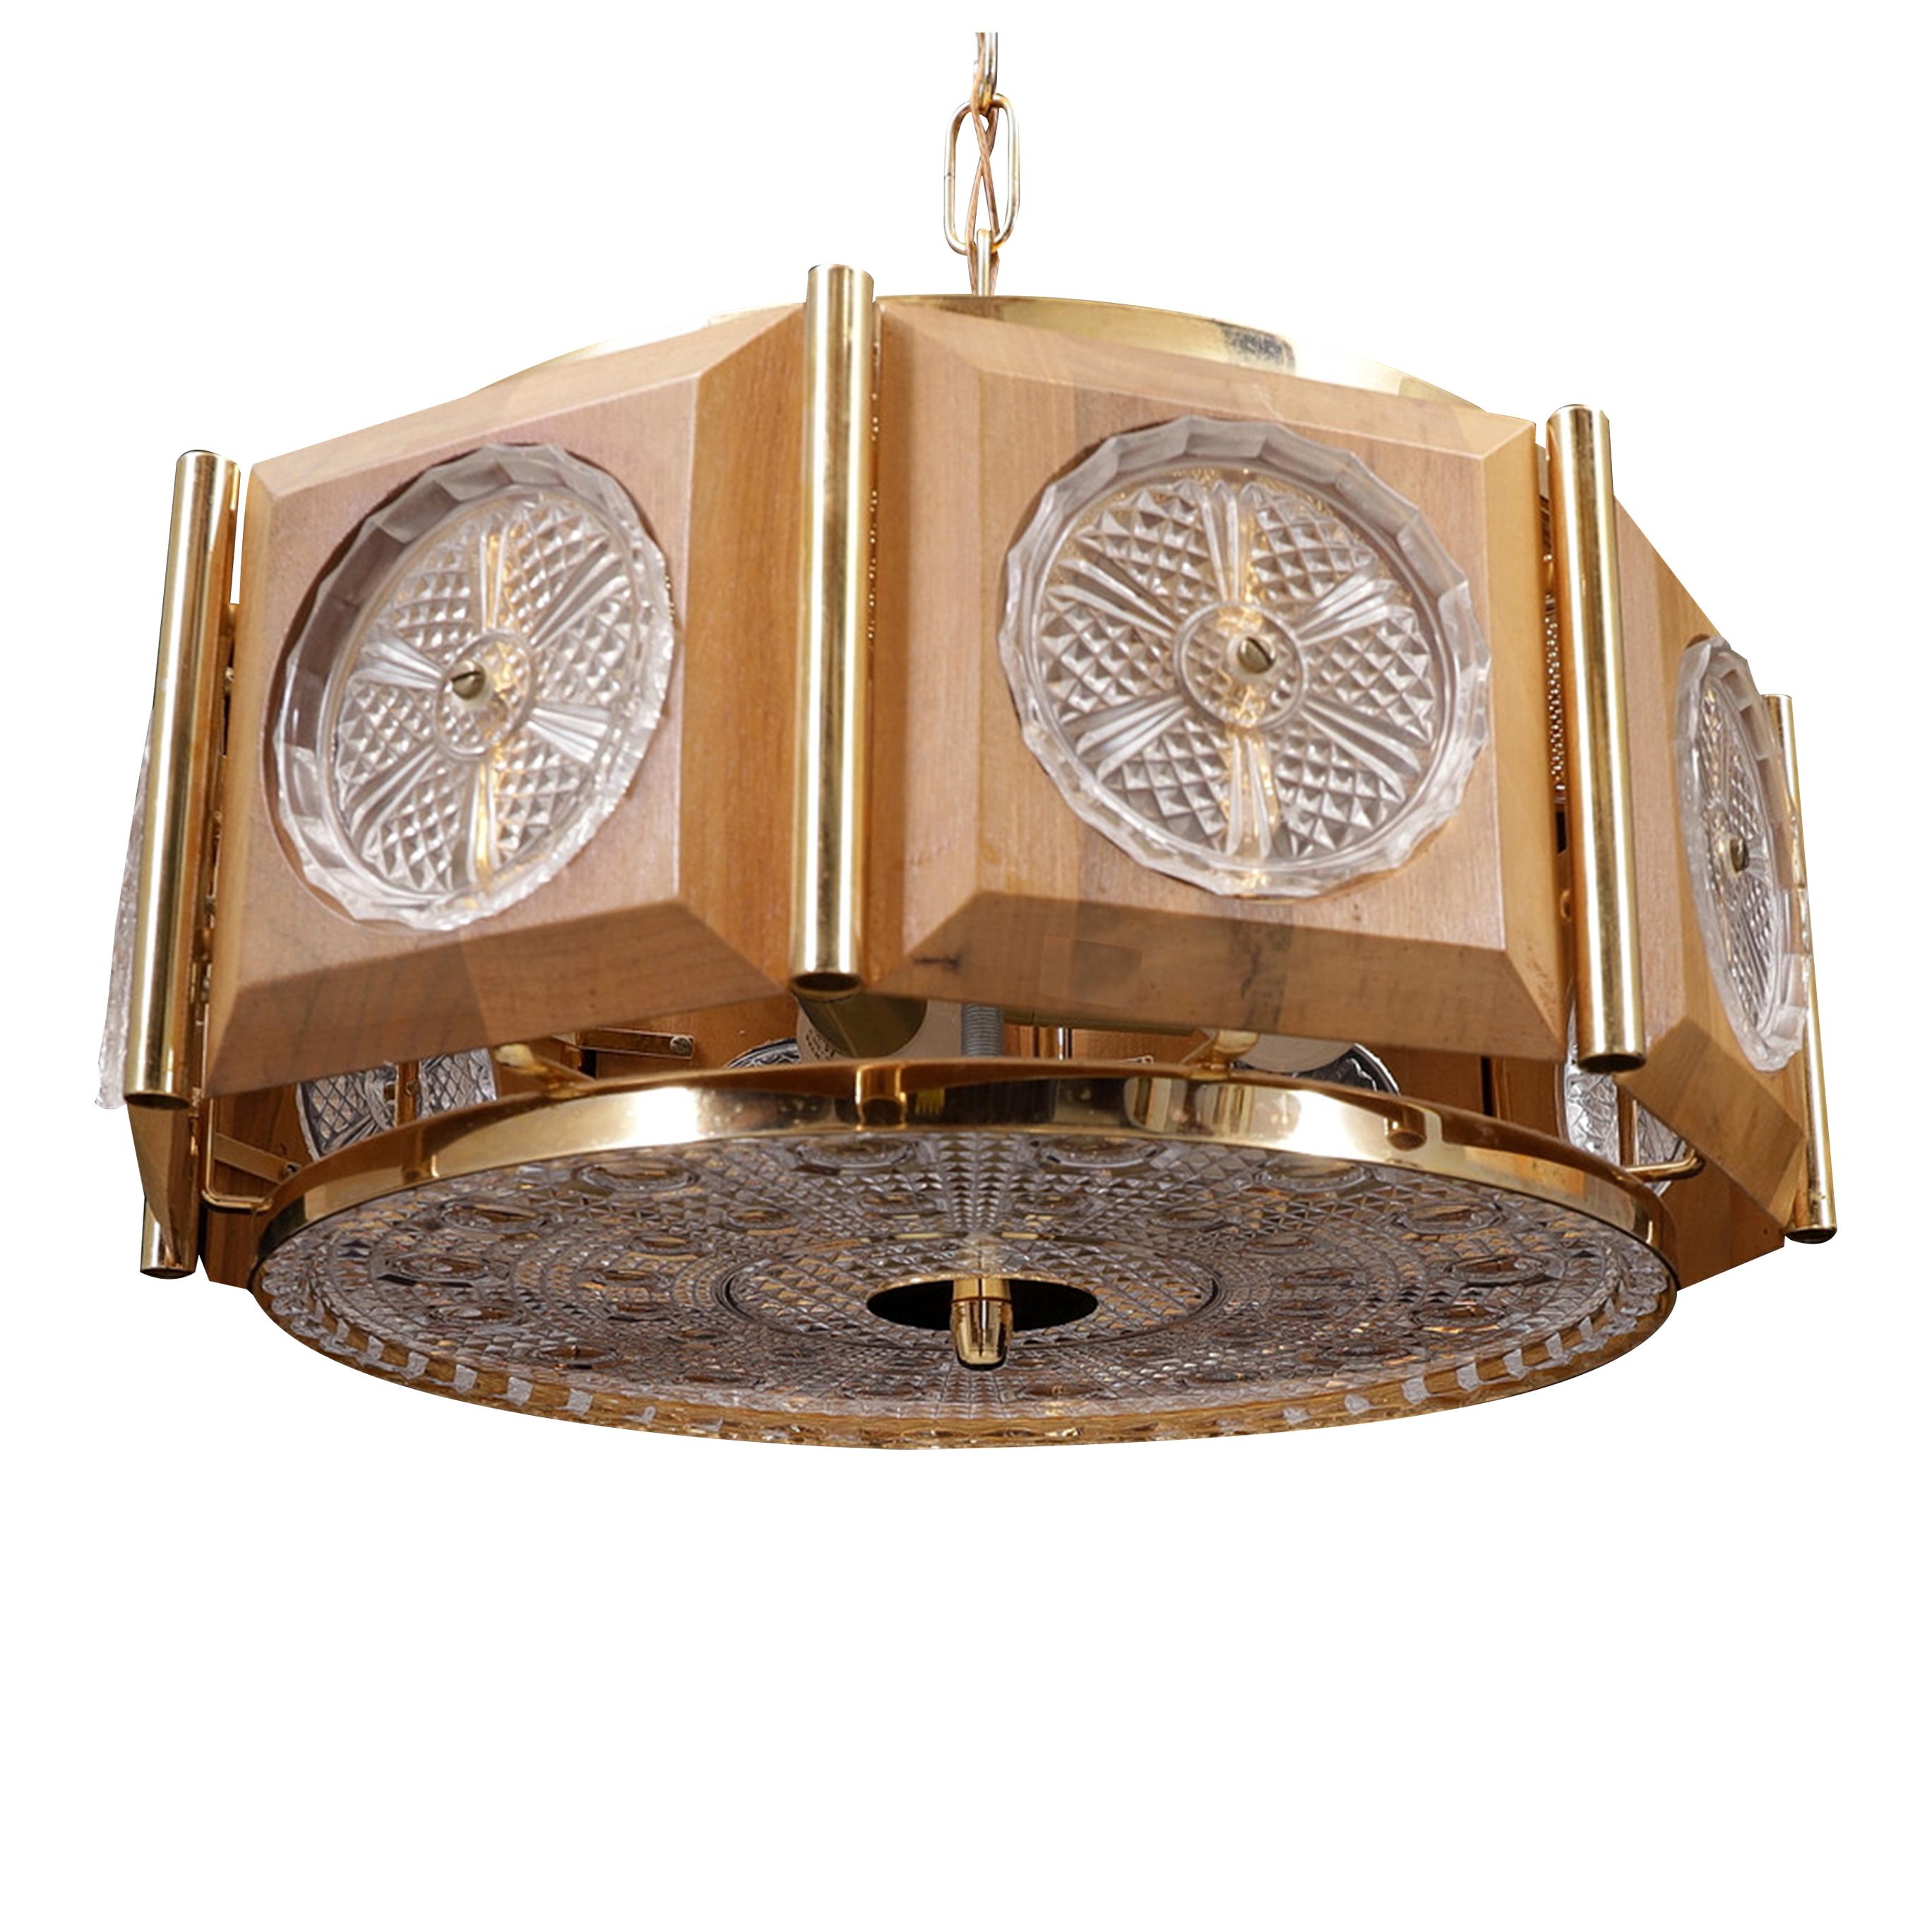 Mid-Century Modern 1950s Swedish Circular Brass Ceiling Light with Walnut Frame & Decorative Discs